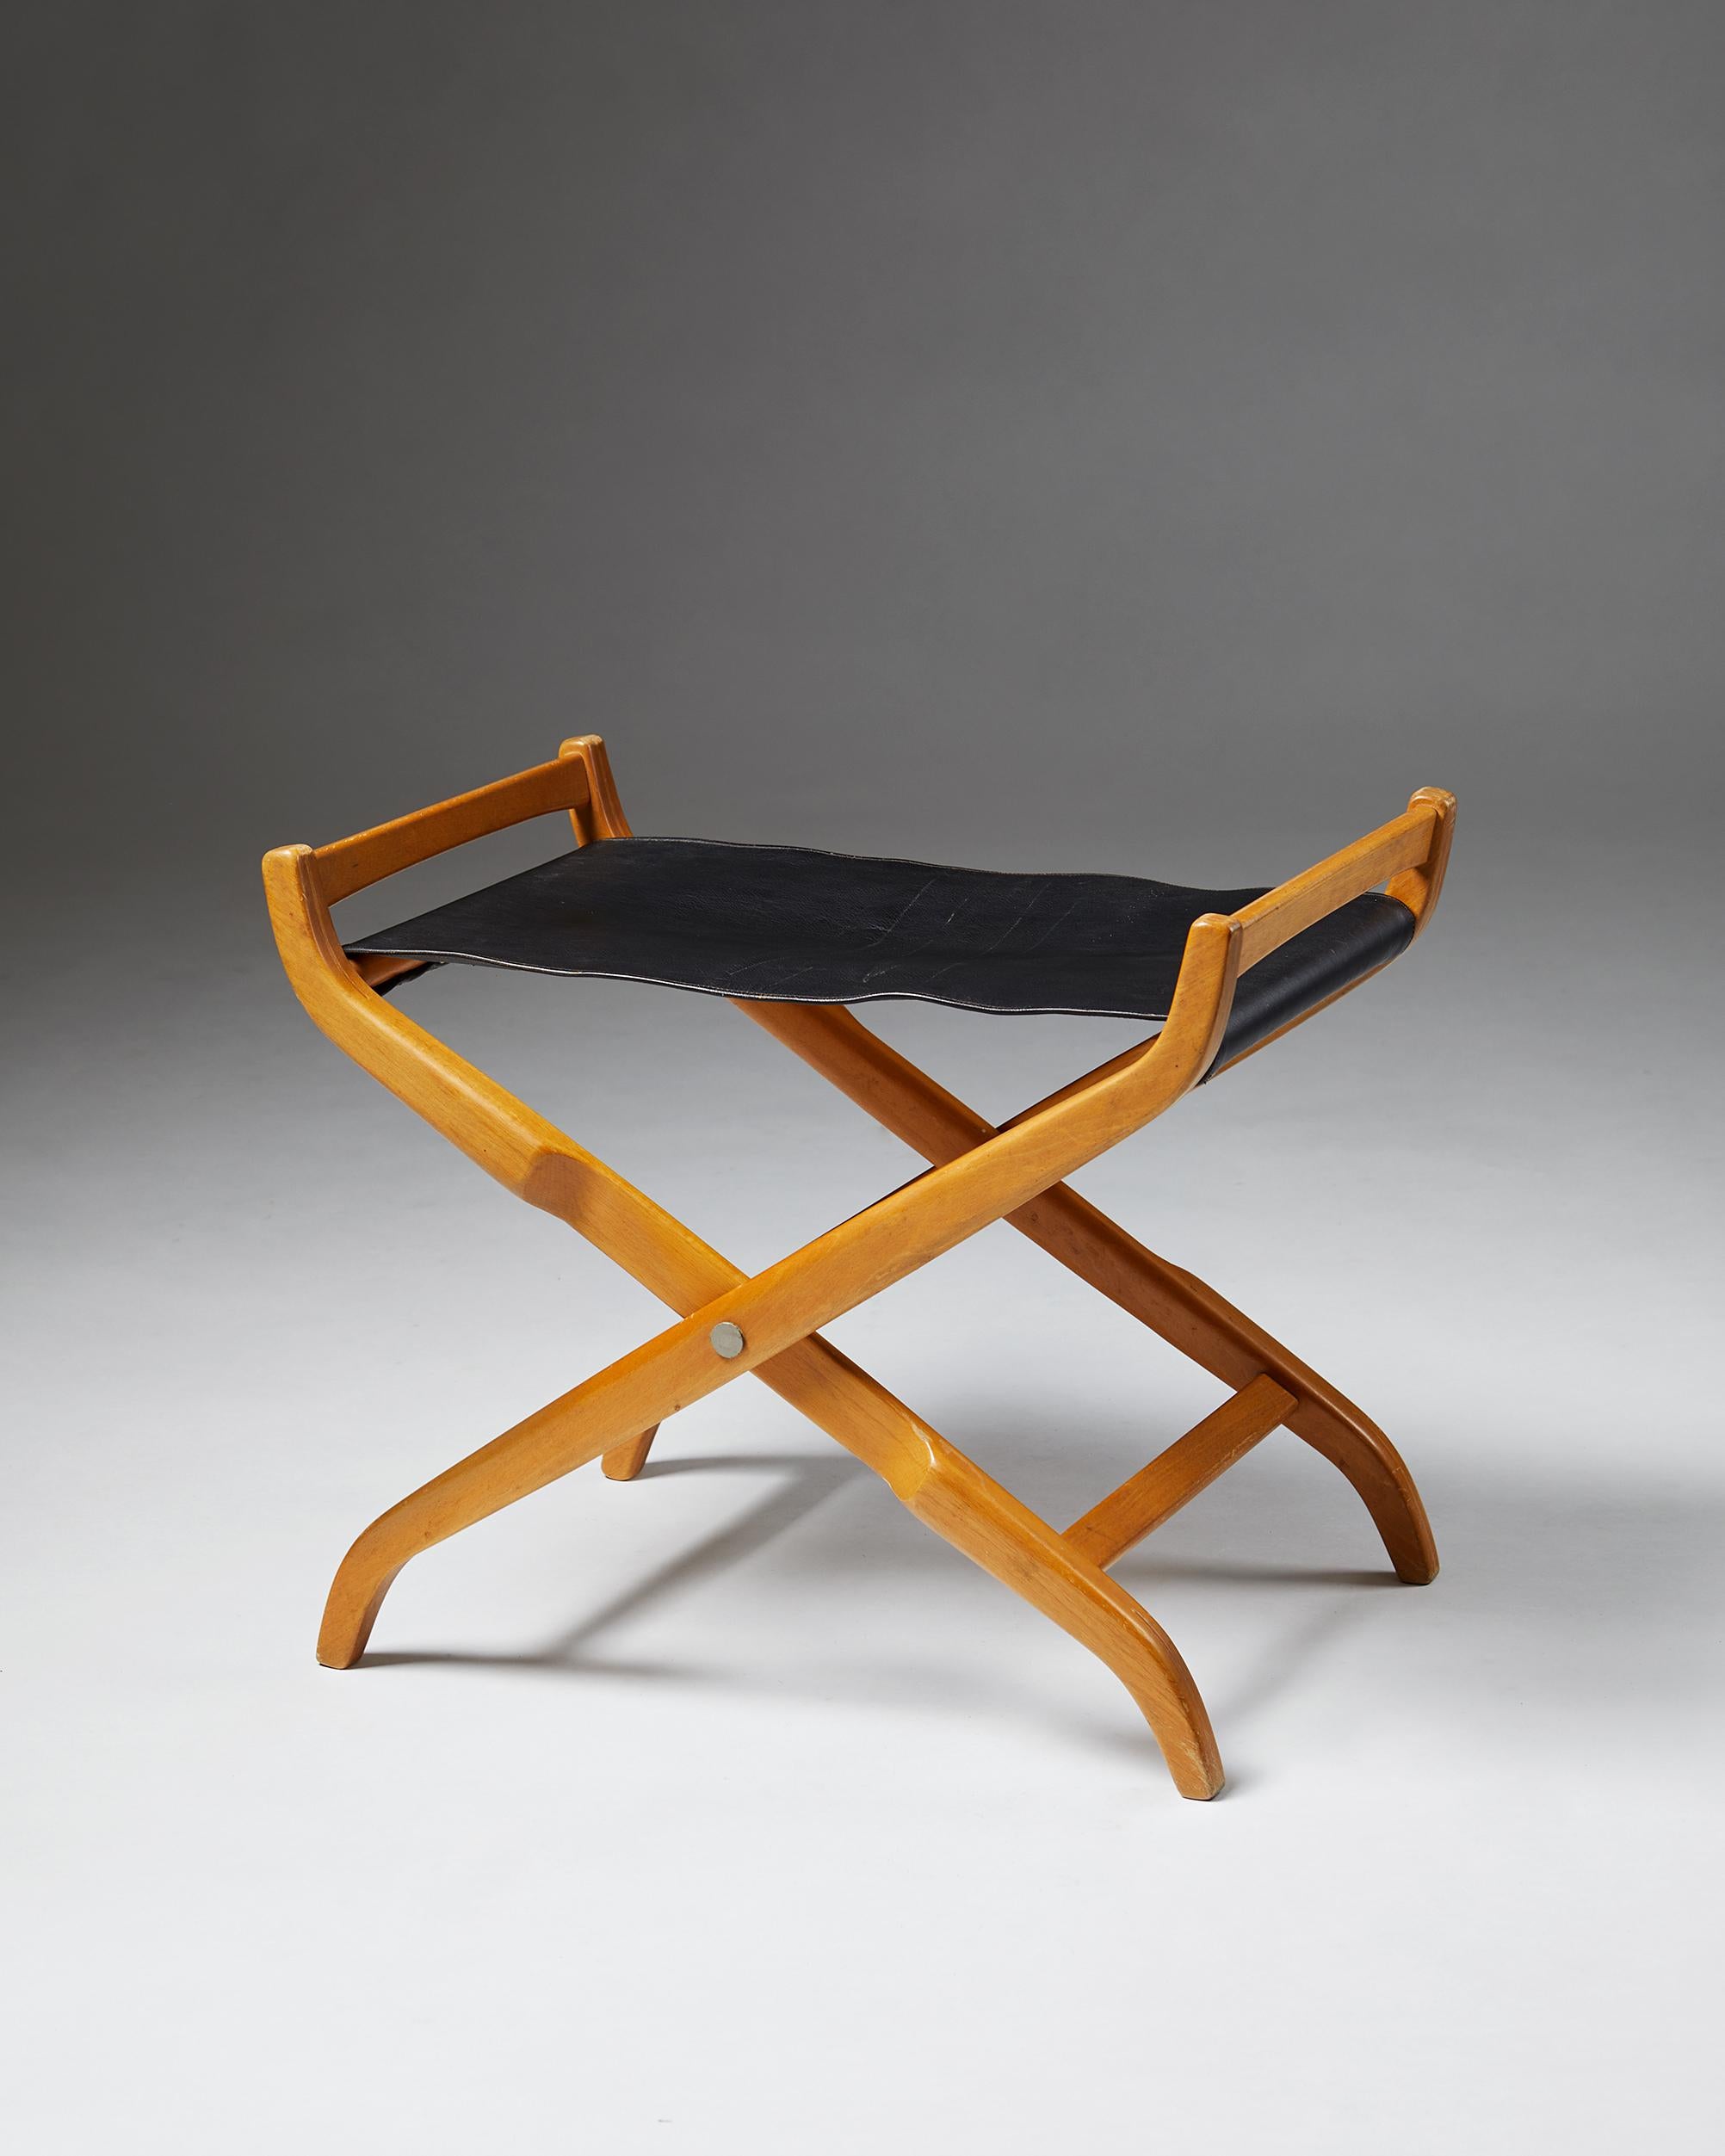 Folding stool “Futura” designed by David Rosén for Nordiska Kompaniet
Sweden, 1960s.
Leather and beech.

Measures: H 48 cm/ 1' 7 1/2